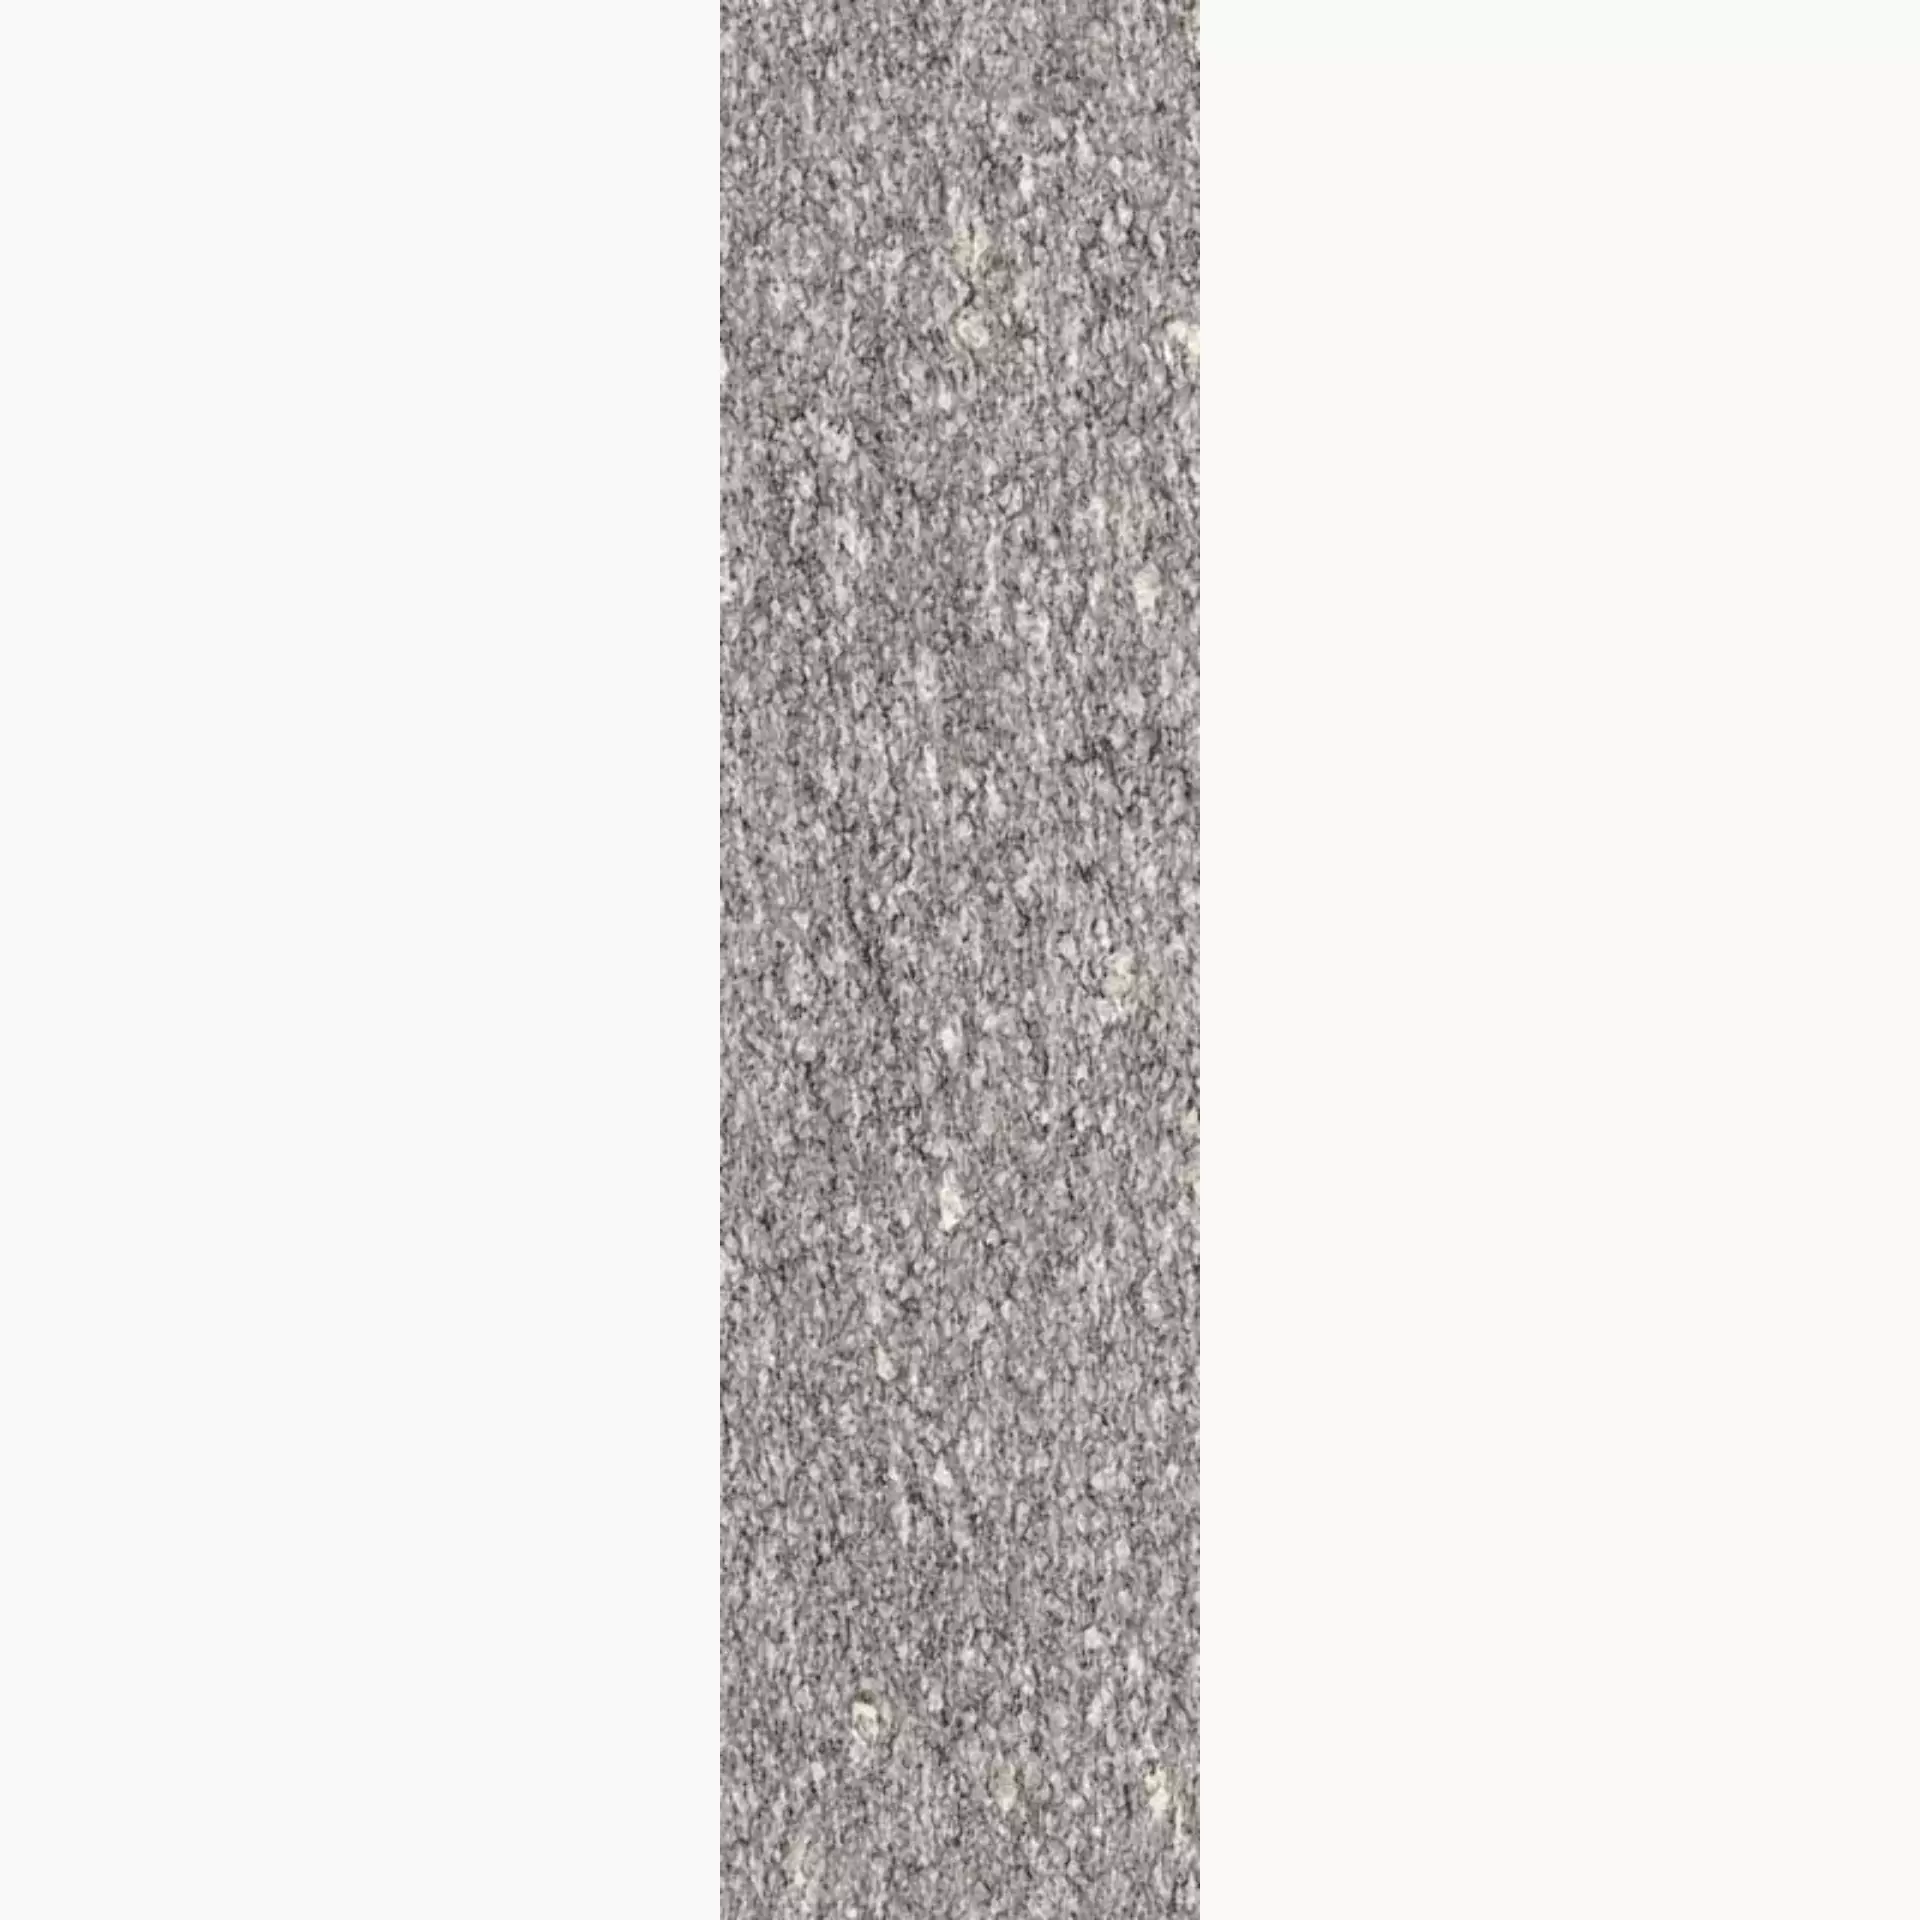 Sant Agostino Unionstone London Grey Natural London Grey CSALOGRY15 natur 15x60cm rektifiziert 10mm